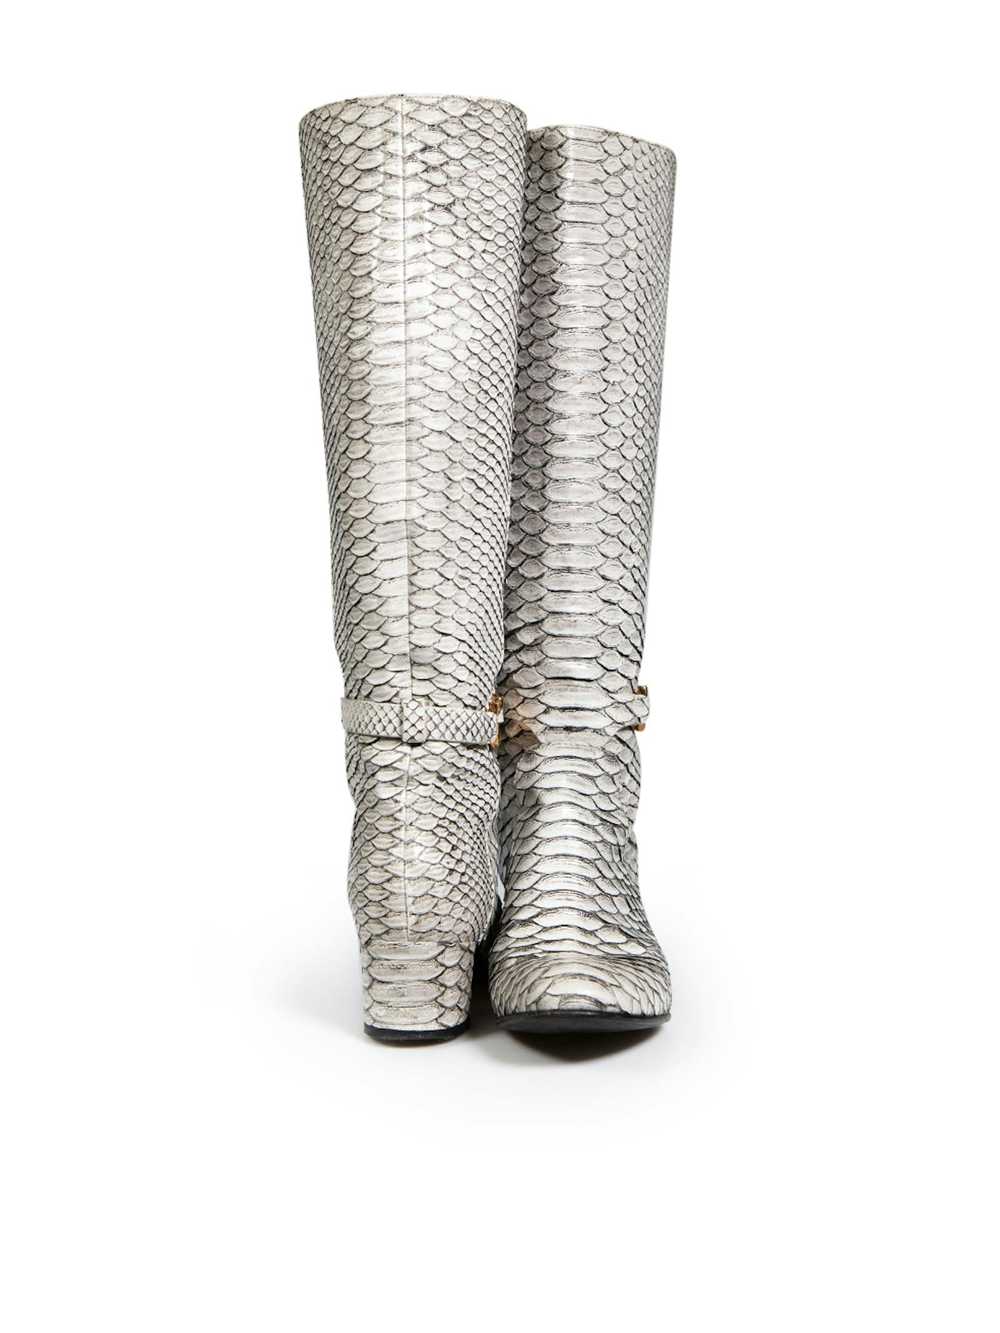 Sergio Rossi Grey Python Knee High Boots - image 3